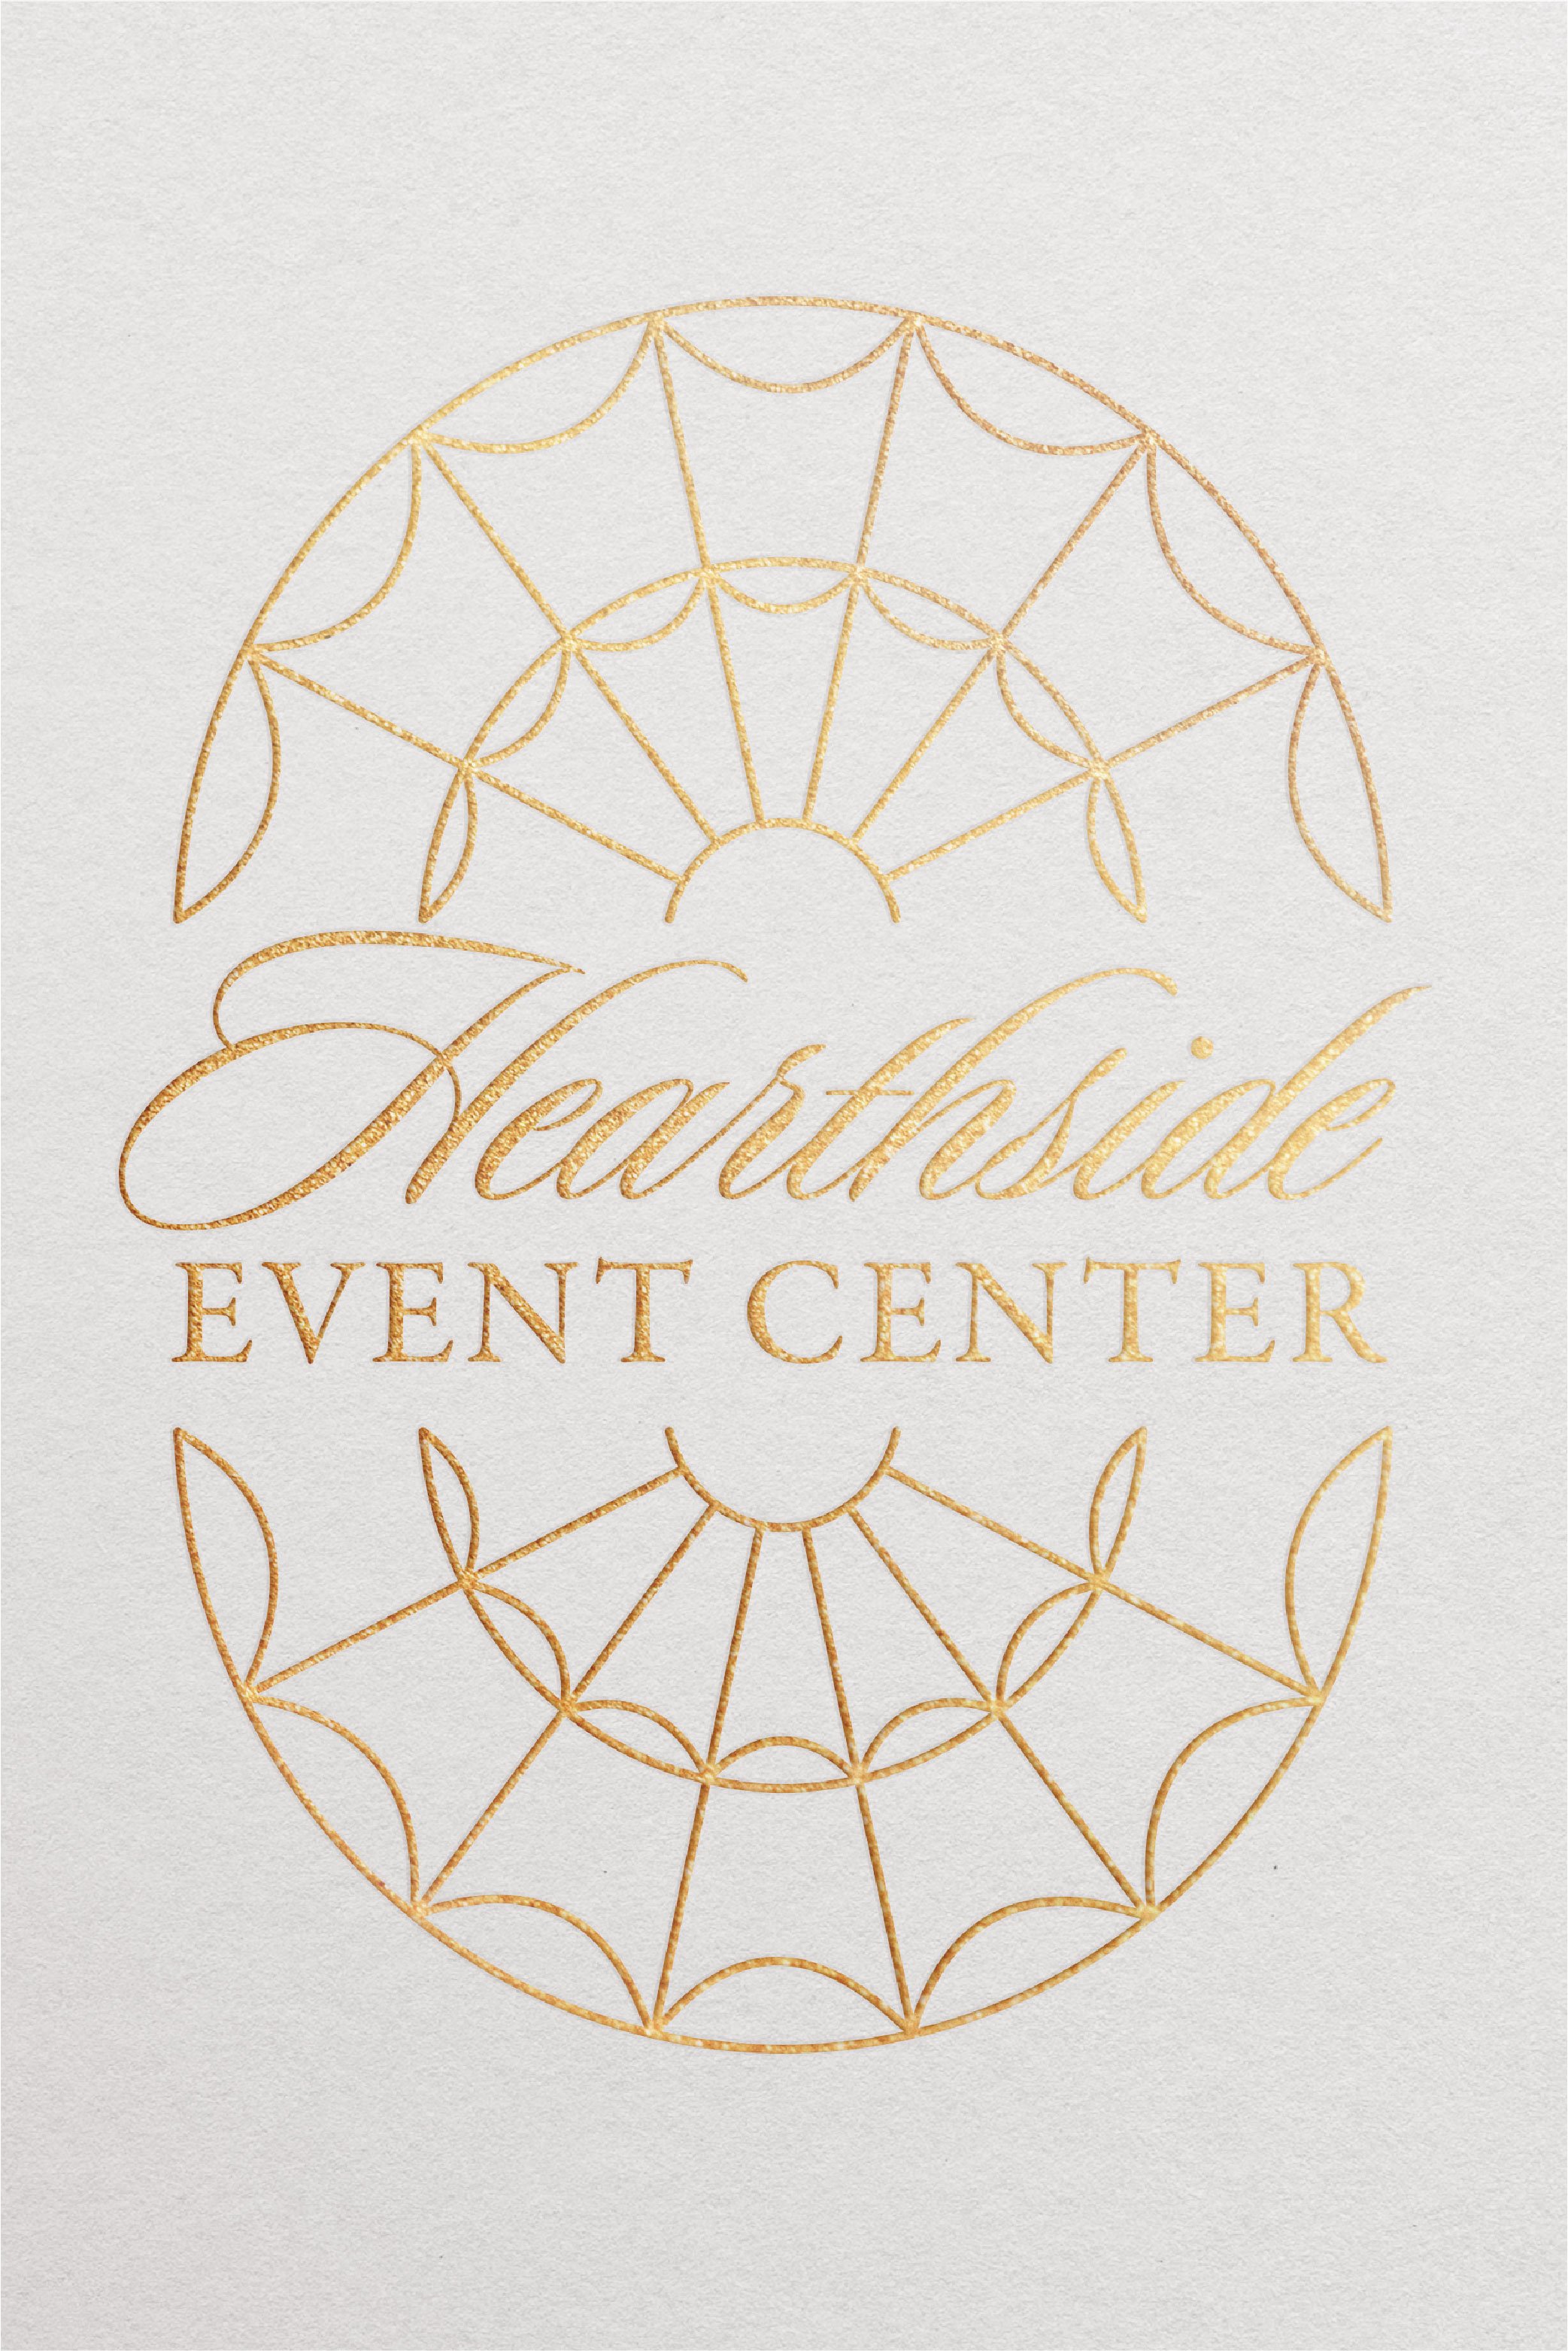  Gold embossed logo for Hearthside Event Center designed by Mangum Design Co. #montanagraphicdesigner #customlogos #logoandbranddesign #brandingservices #smallbusinessresources #hearthsideeventcenter 